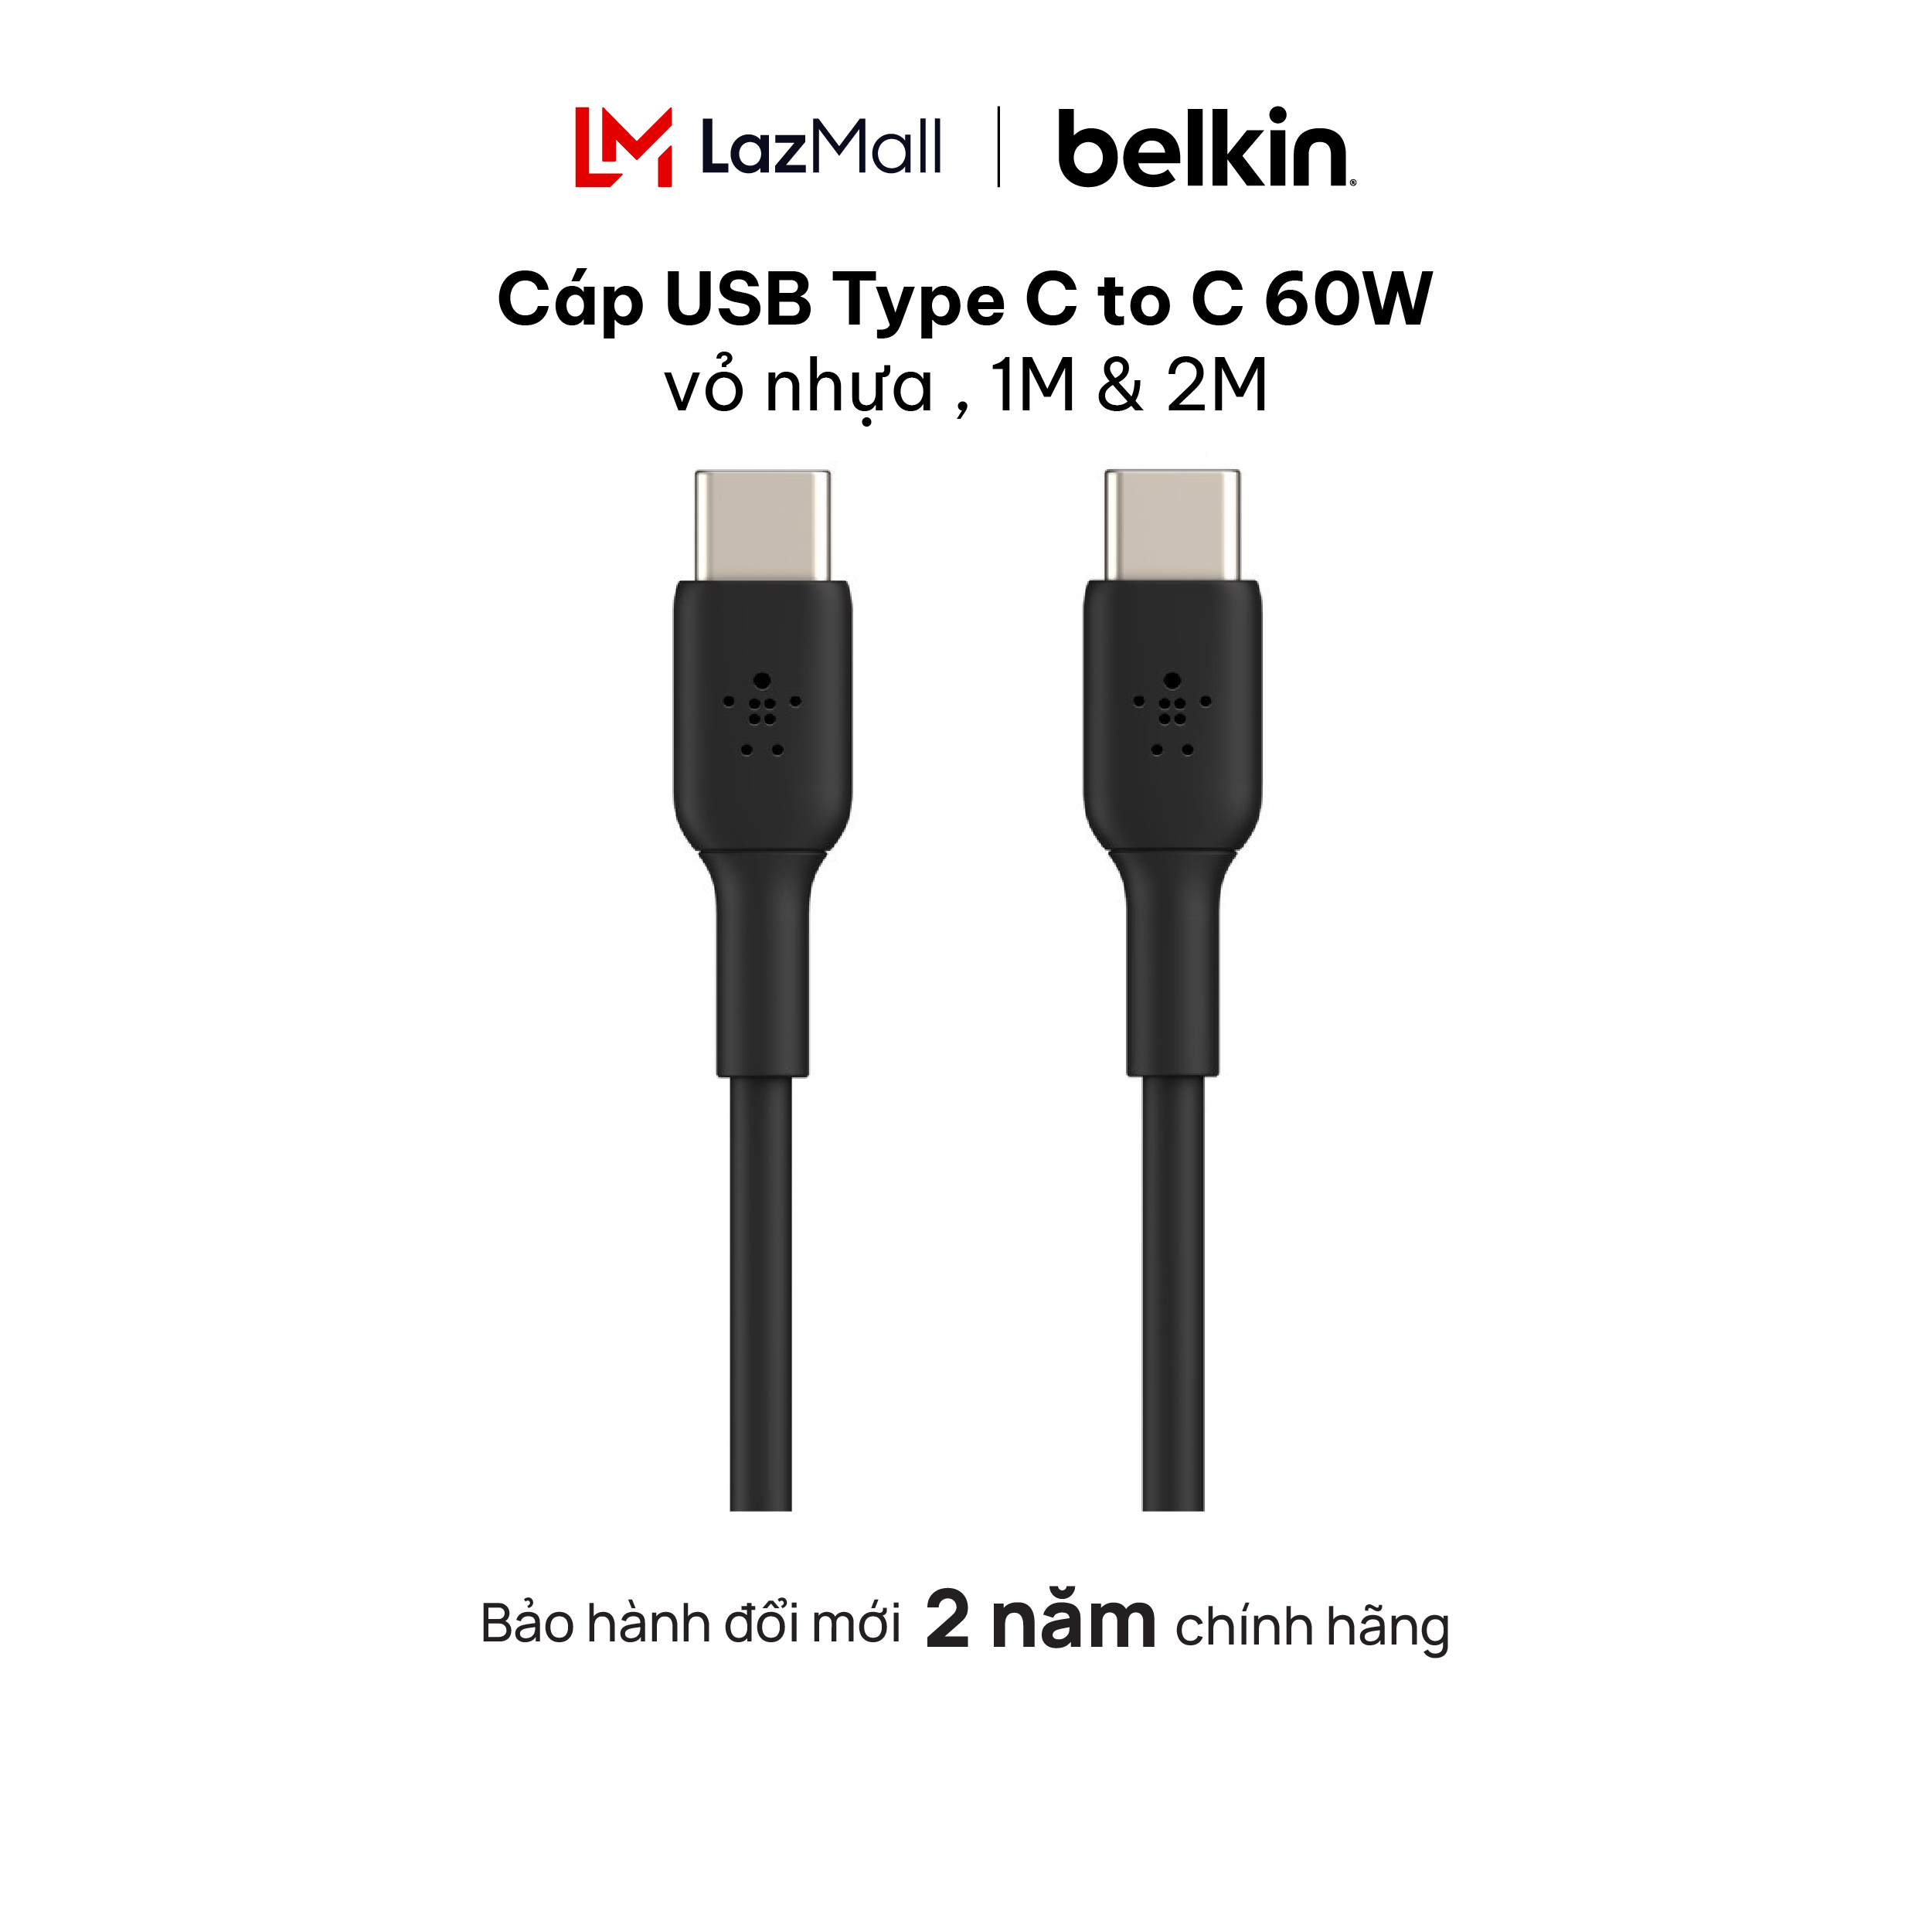 Cáp USB Type C to USB Type C BOOST CHARGETM Belkin 1M & 2M vỏ nhựa 60W